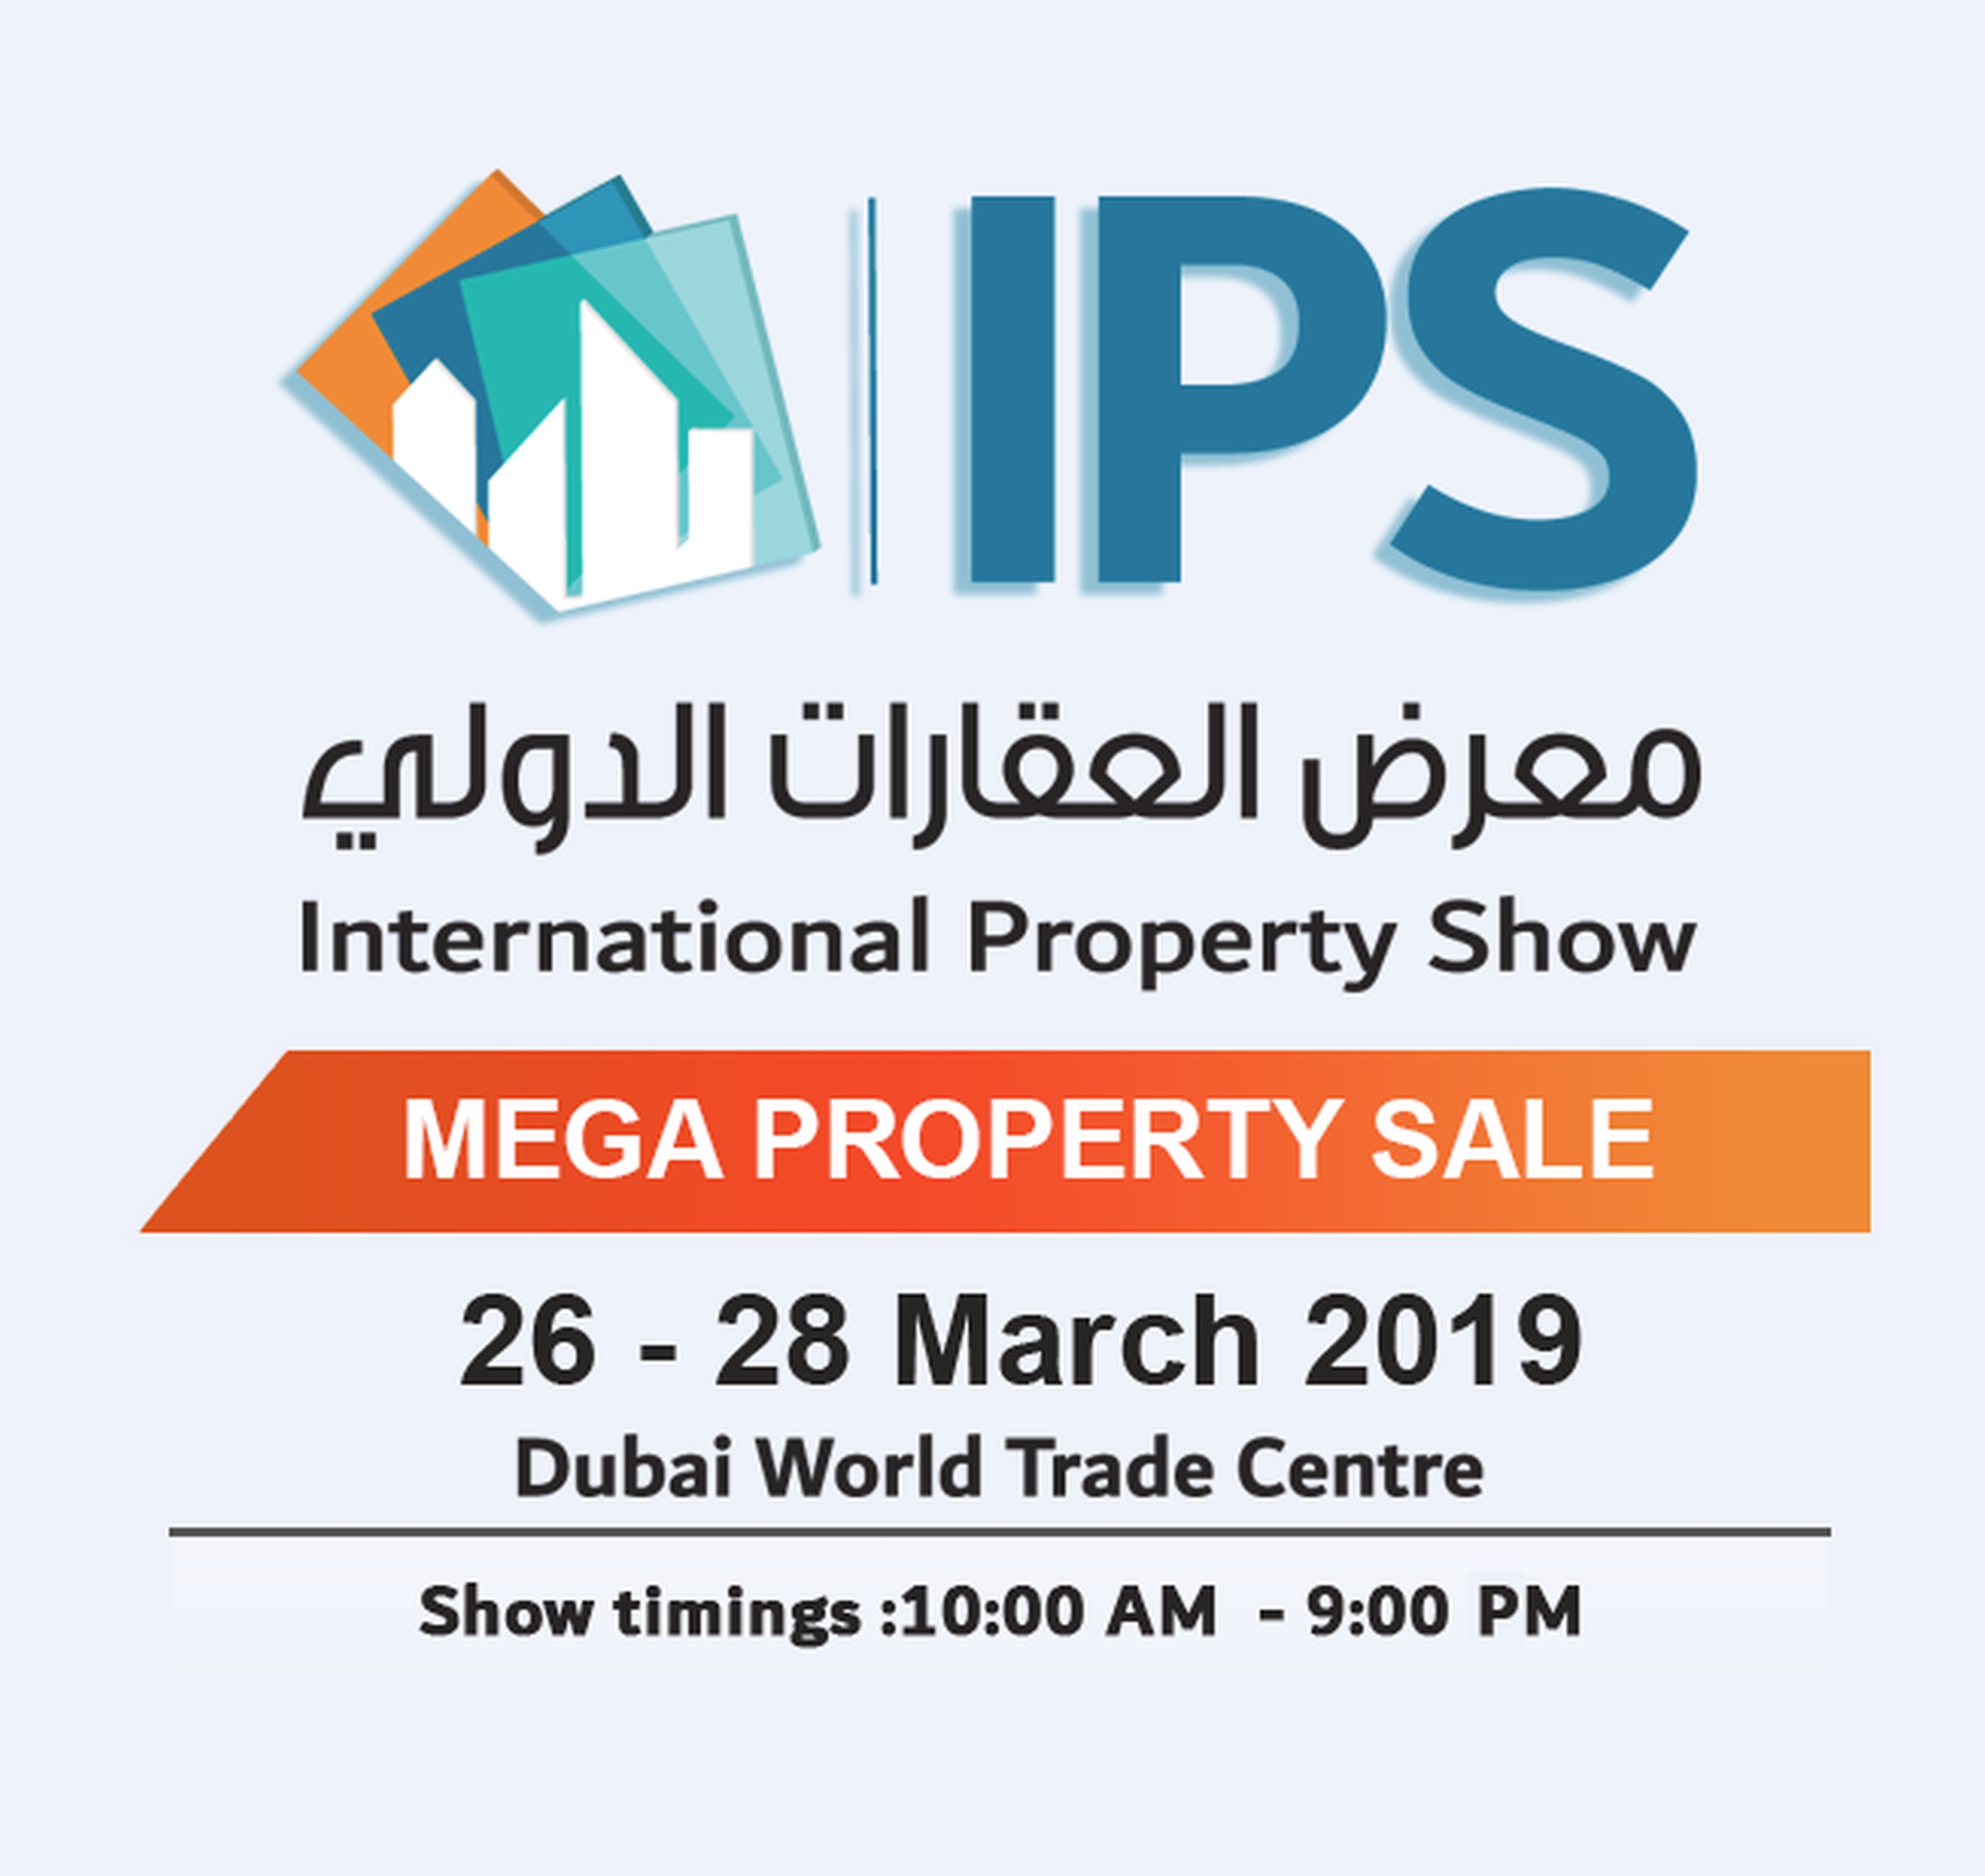 International Property Show